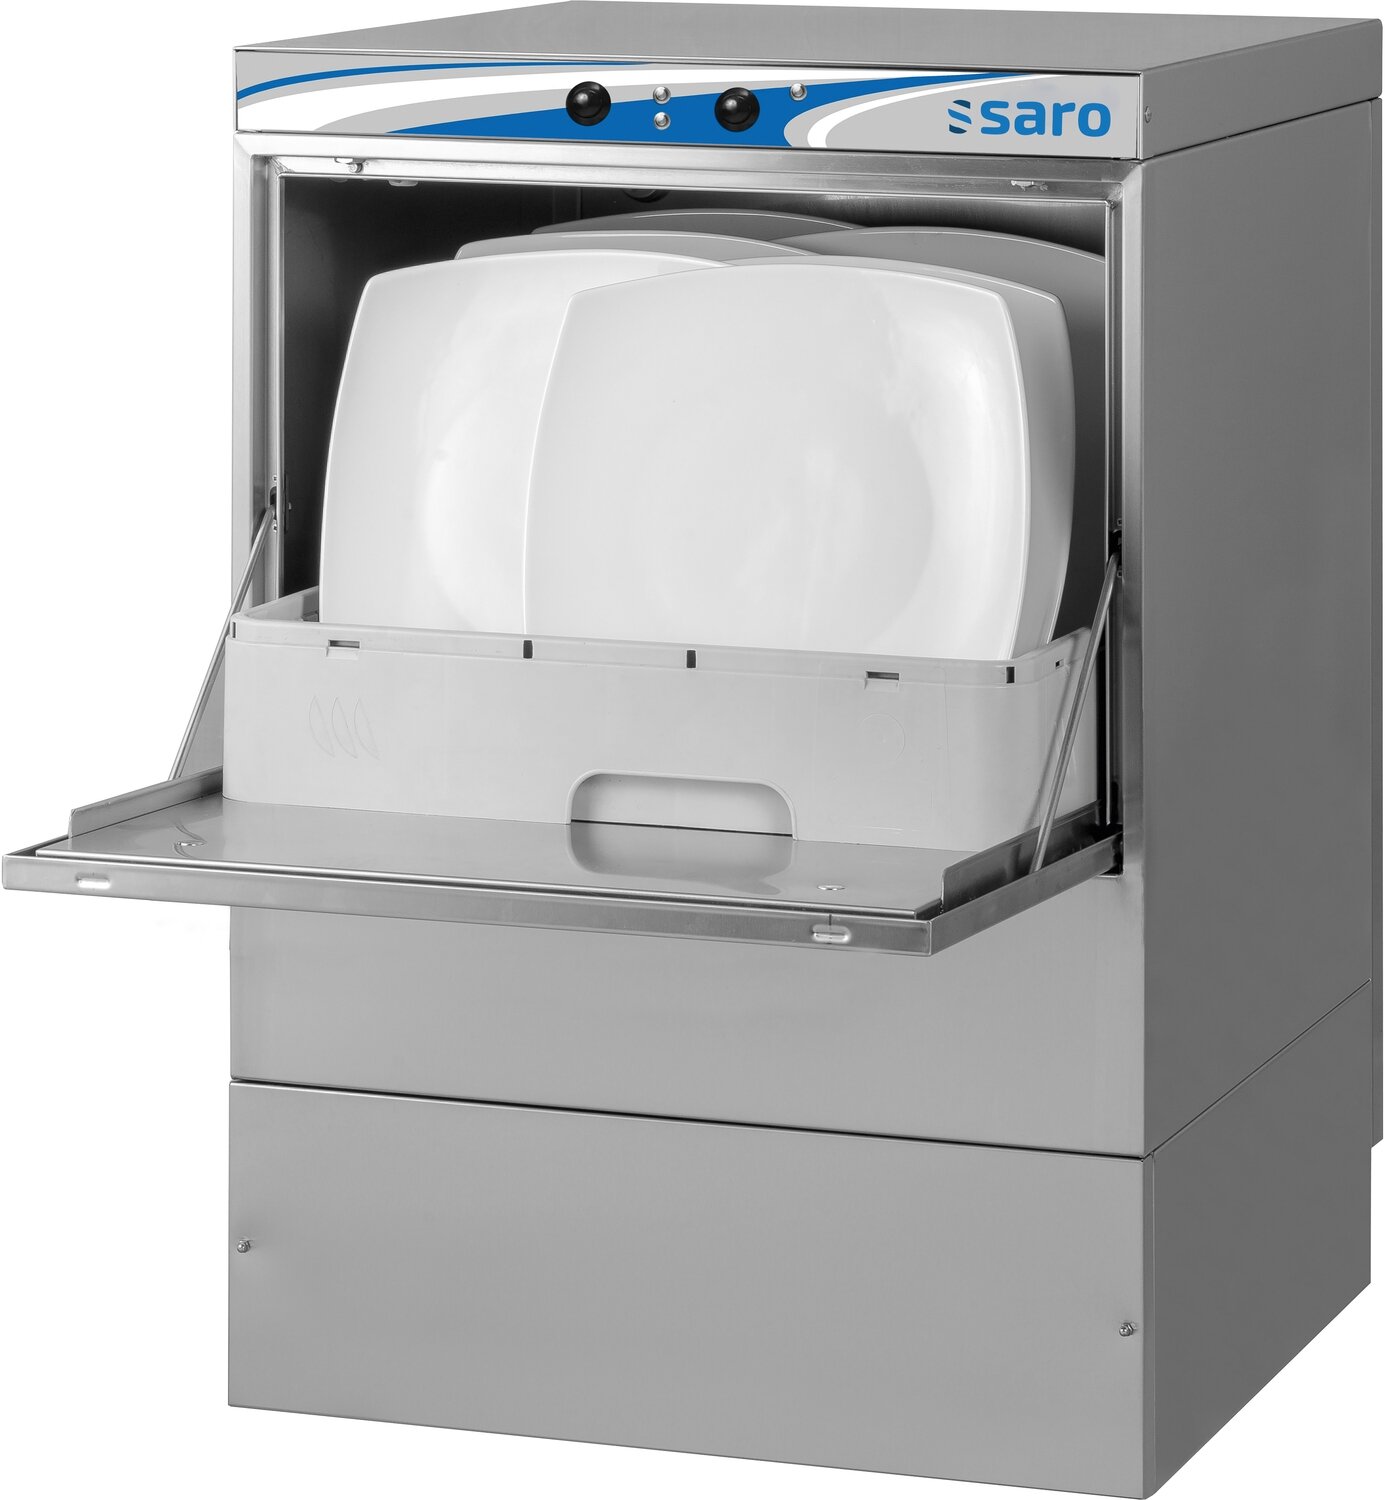 SARO Dishwasher model MARBURG